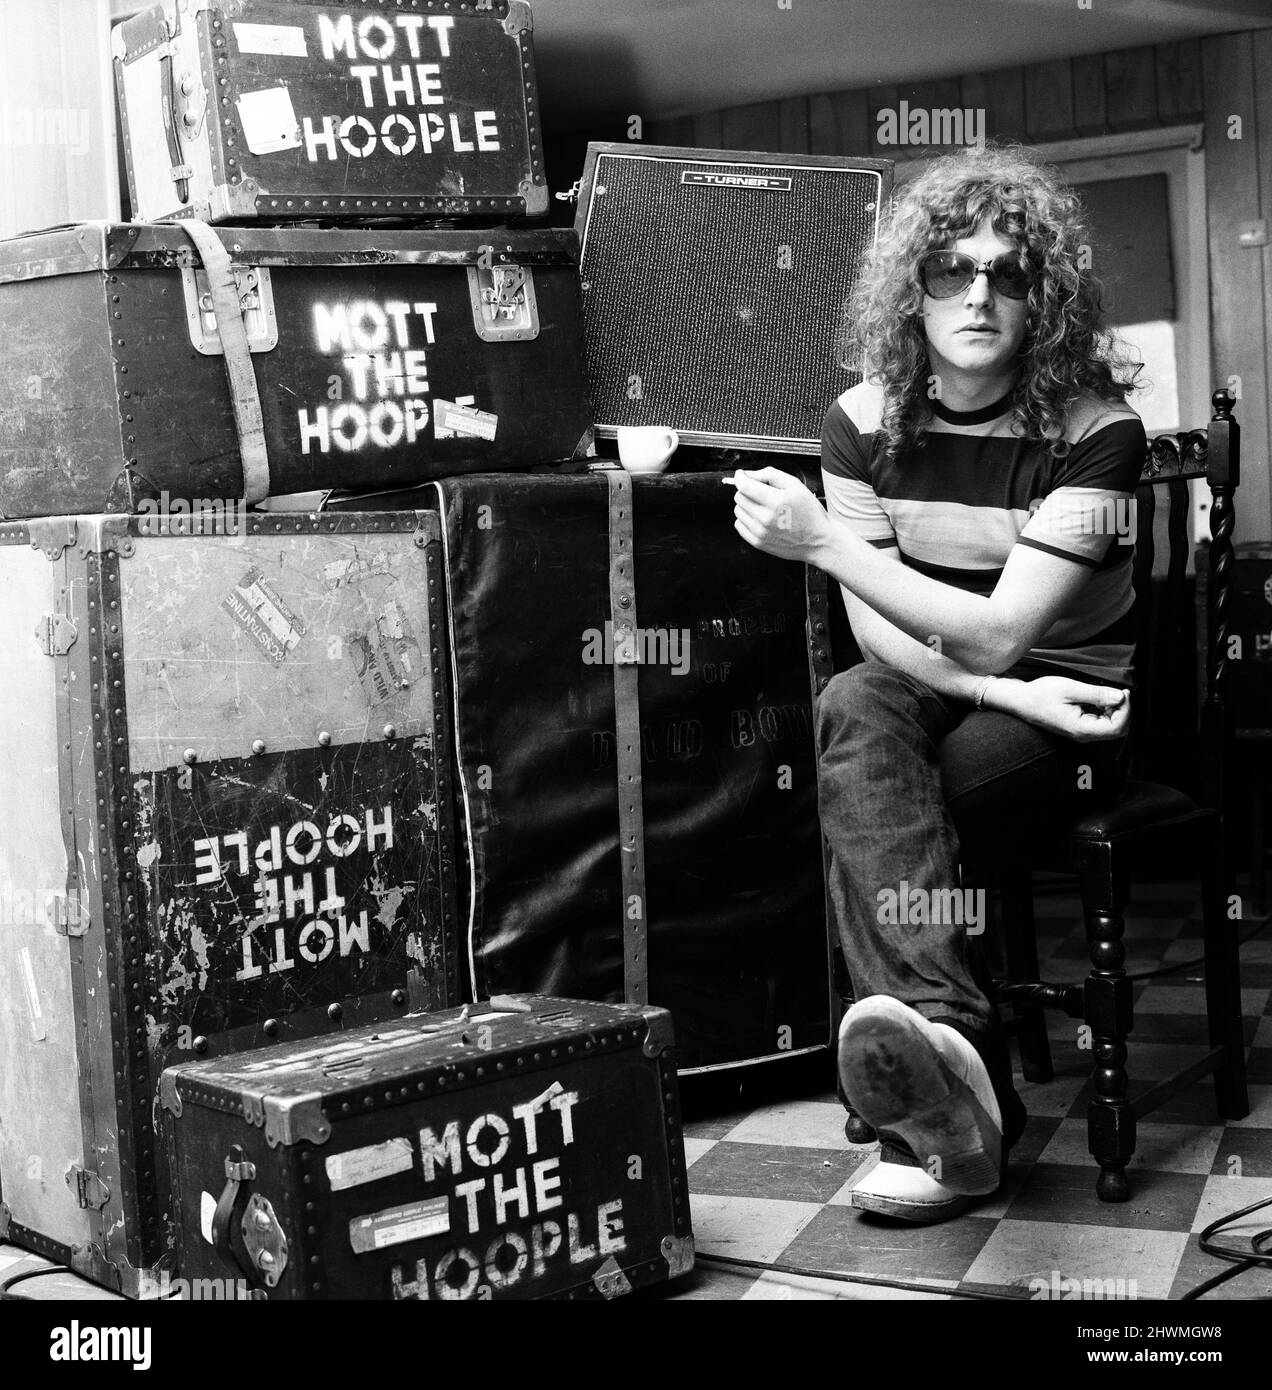 Mott the Hoople singer Ian Hunter. 30th August 1973. Stock Photo